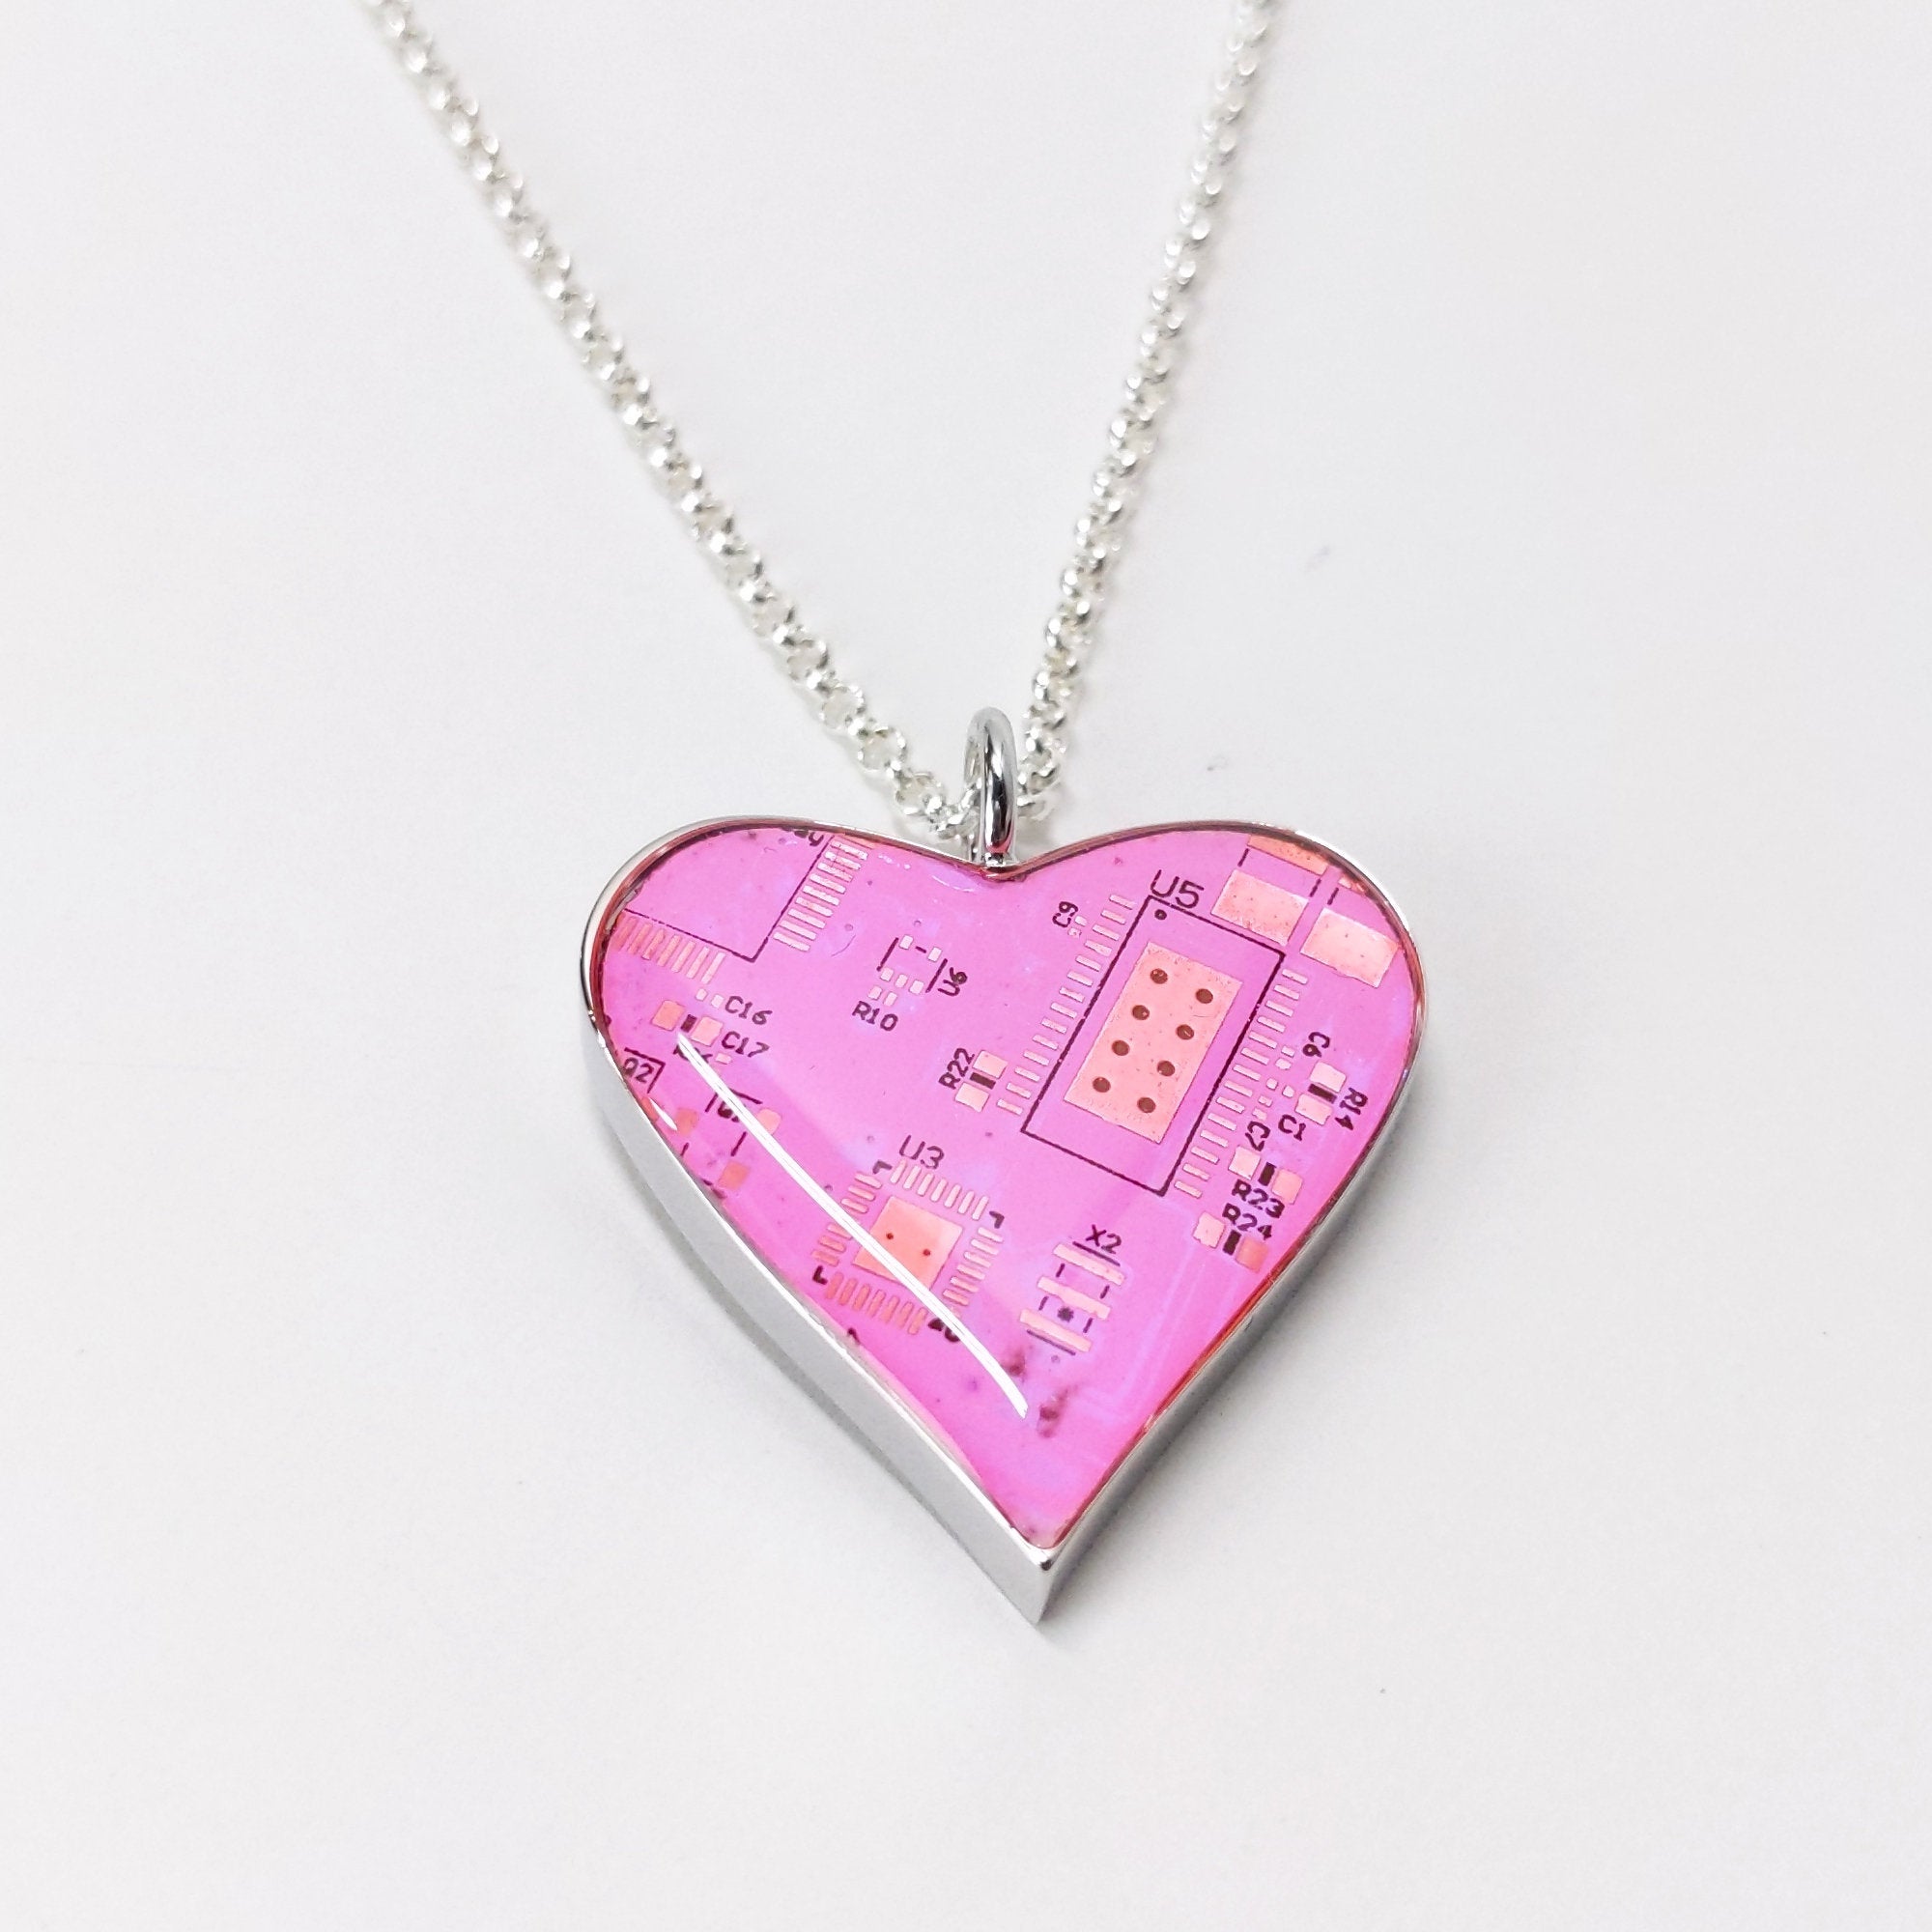 Pink Heart Pendant with Silver Chain - TechWears Ltd